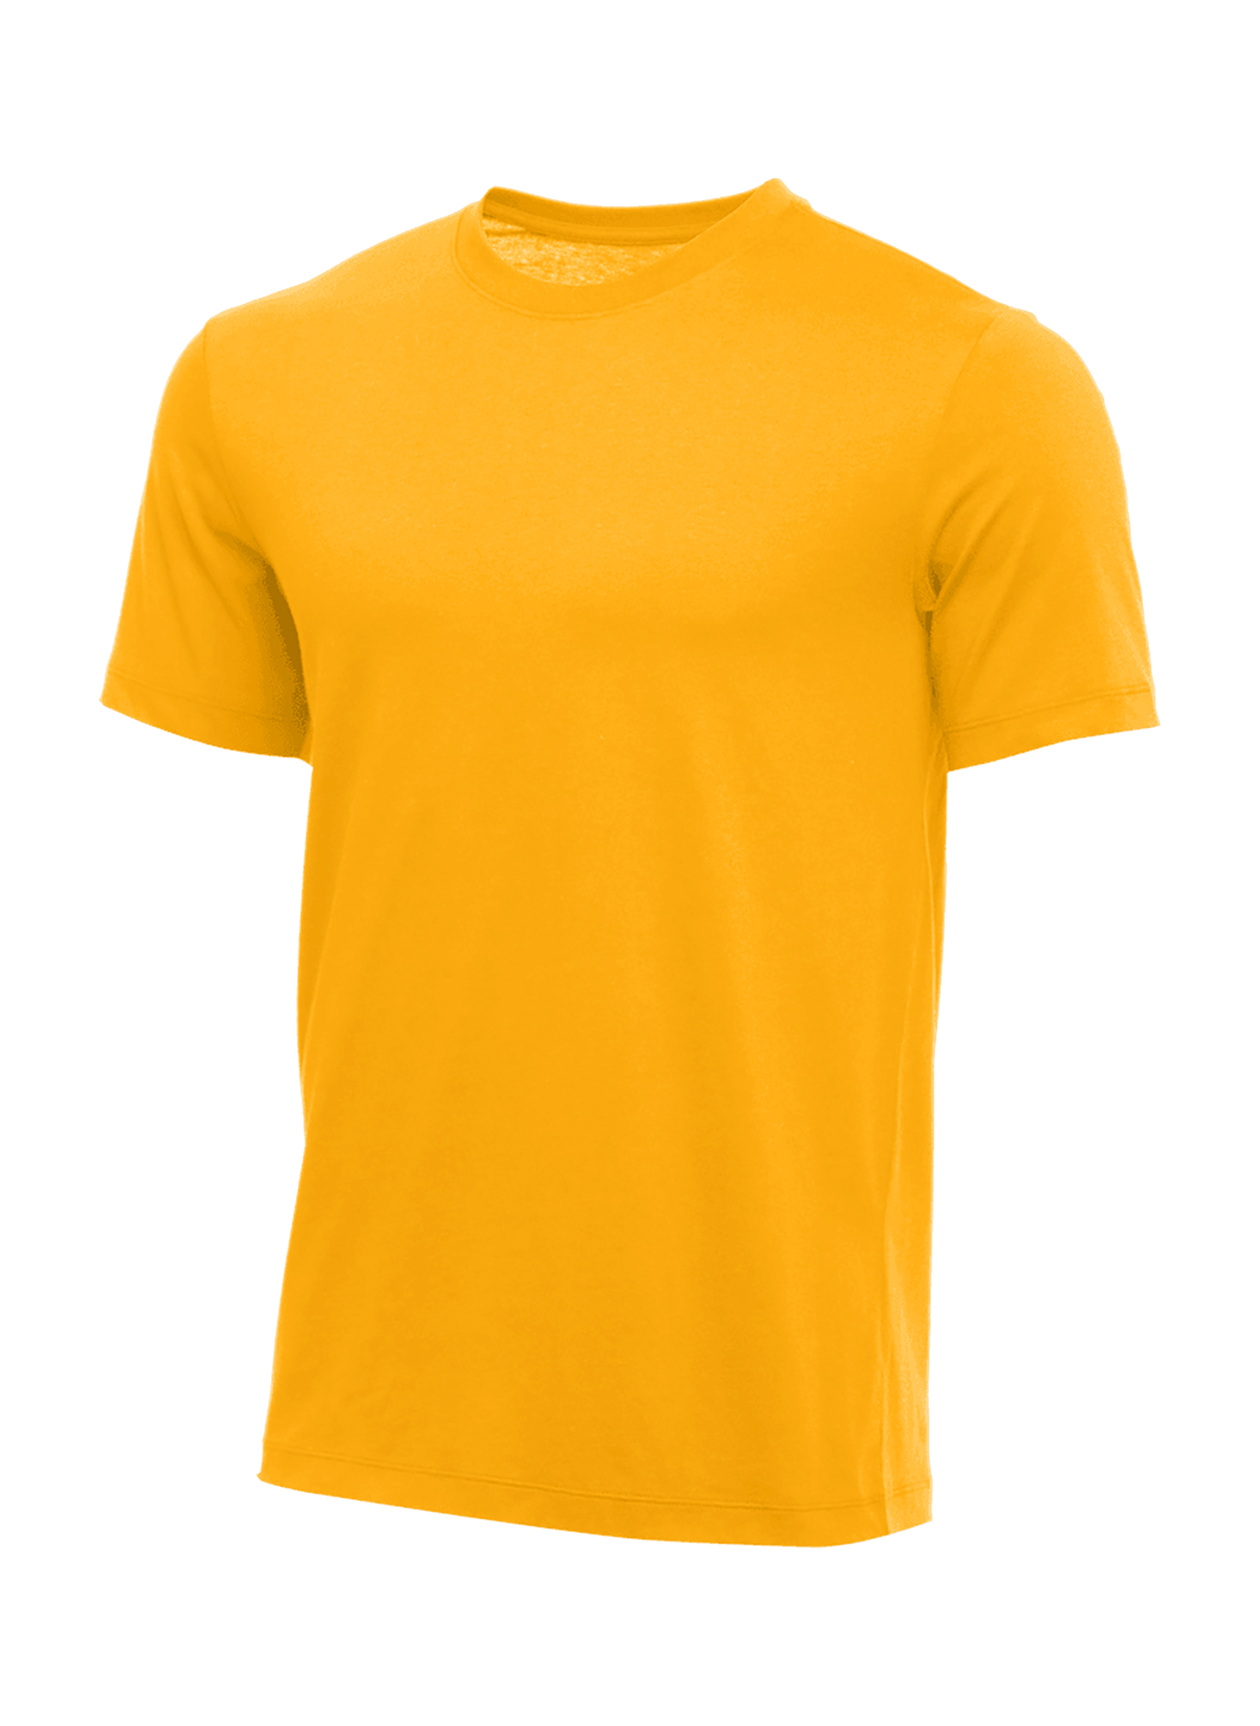 Nike Men's University Gold Training T-Shirt